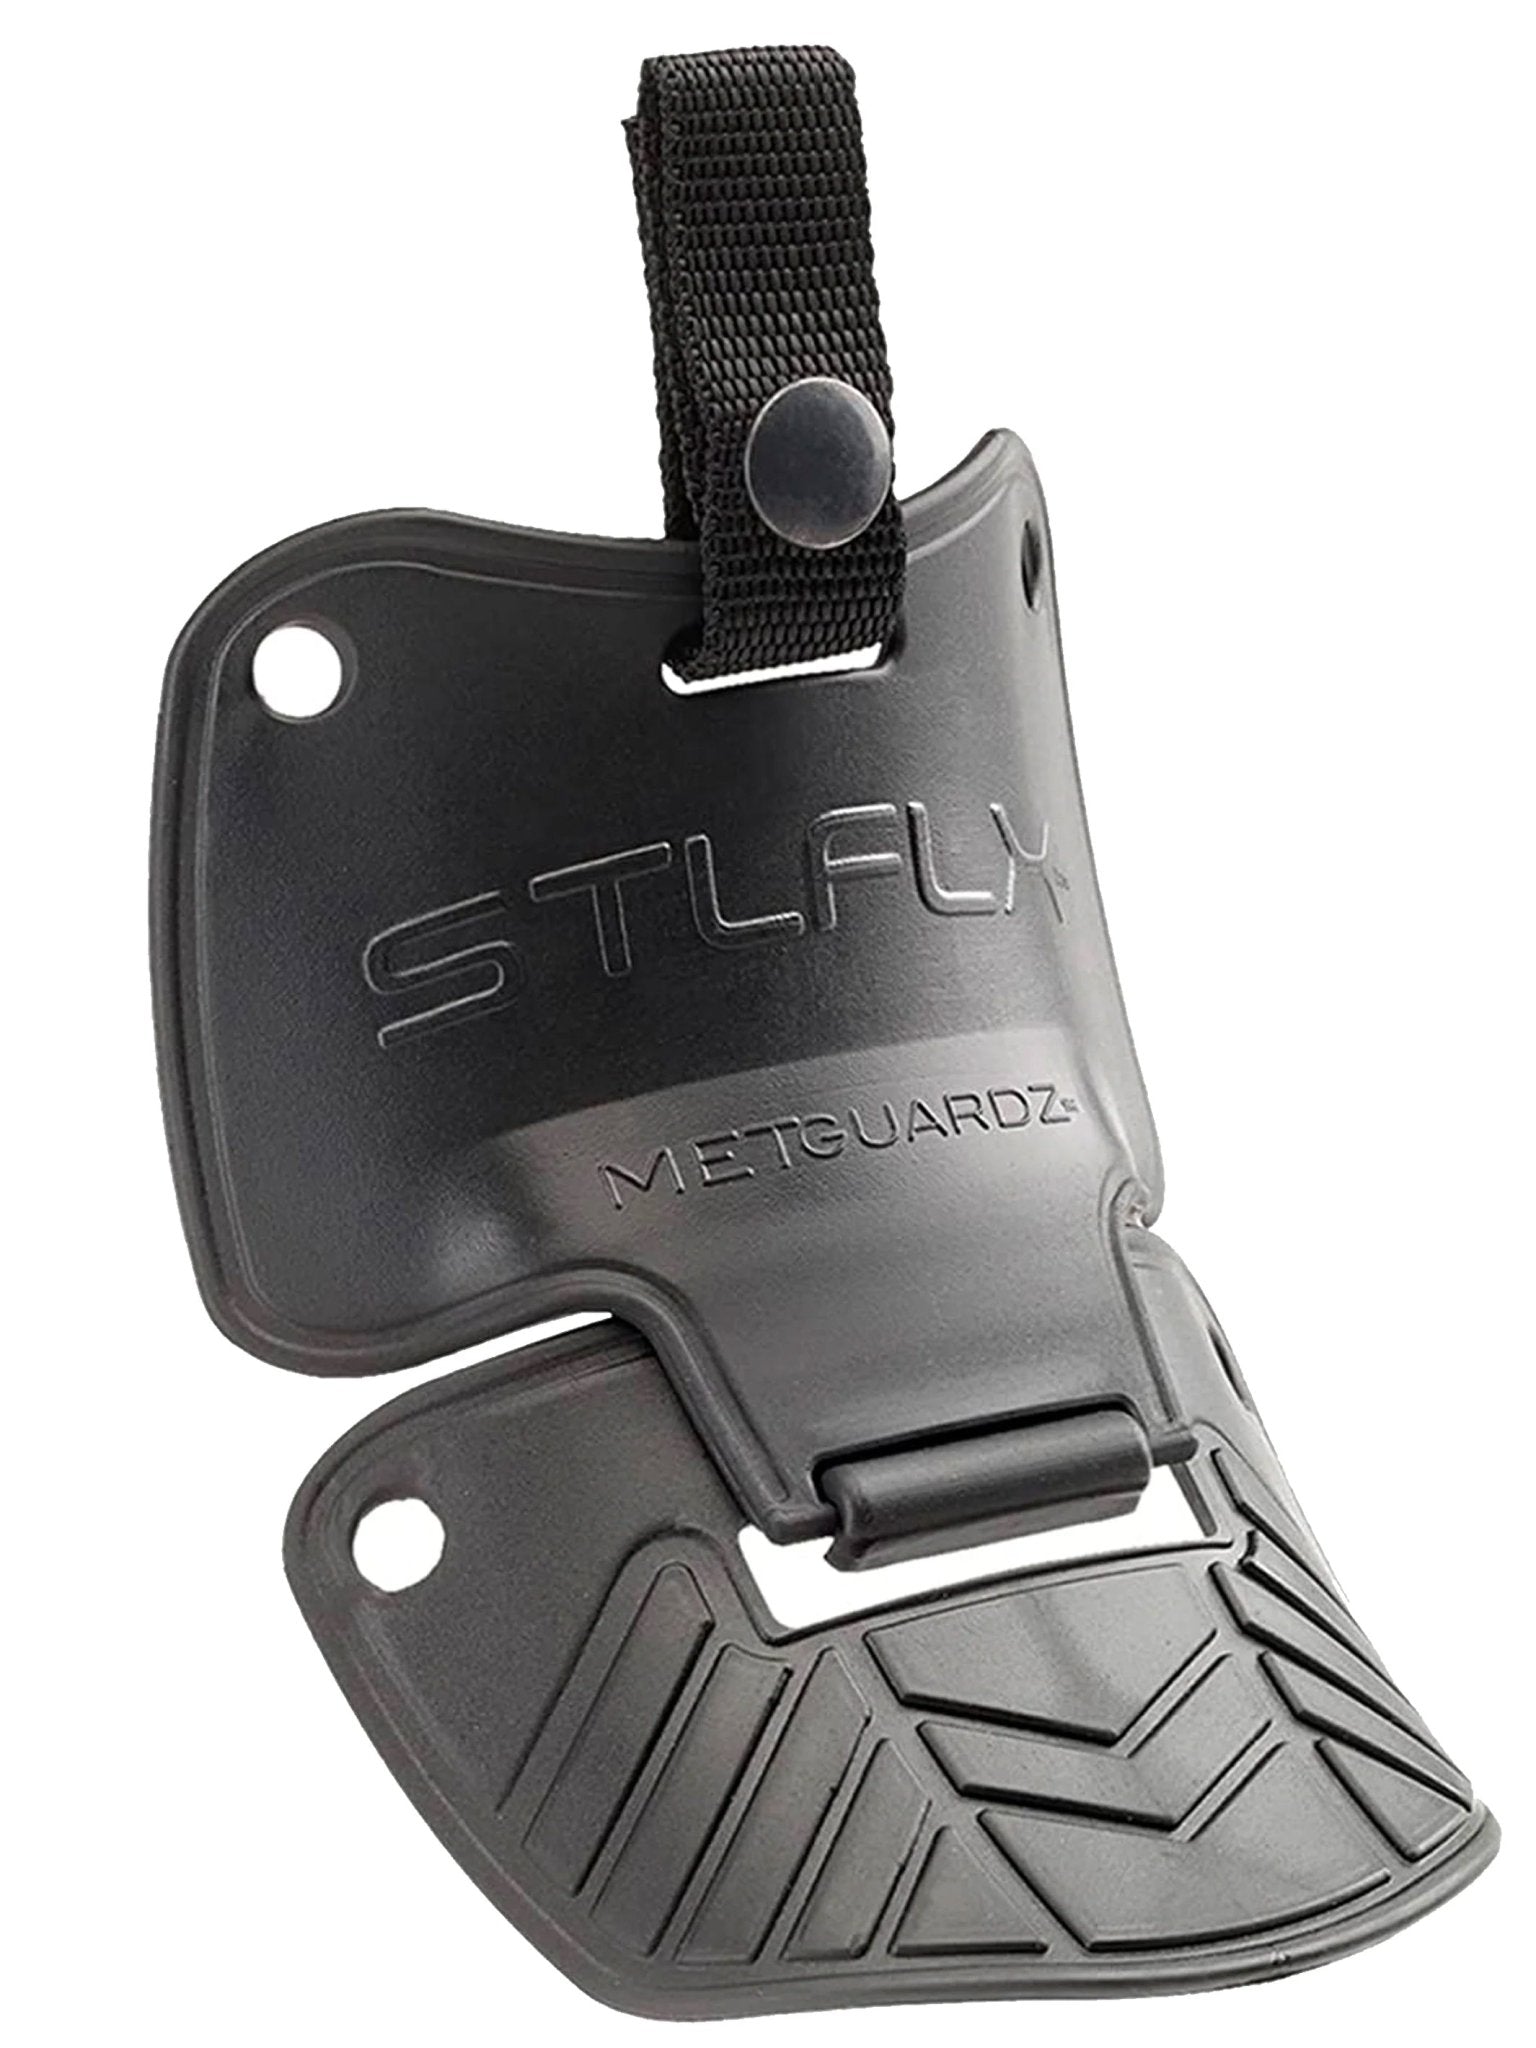 Steel Flex Steel Flex – MetGUARDZ Steel Flex Unisex ProtectMet Met Guards - shoe guard & Shoe & Boot Guards Safety Footwear